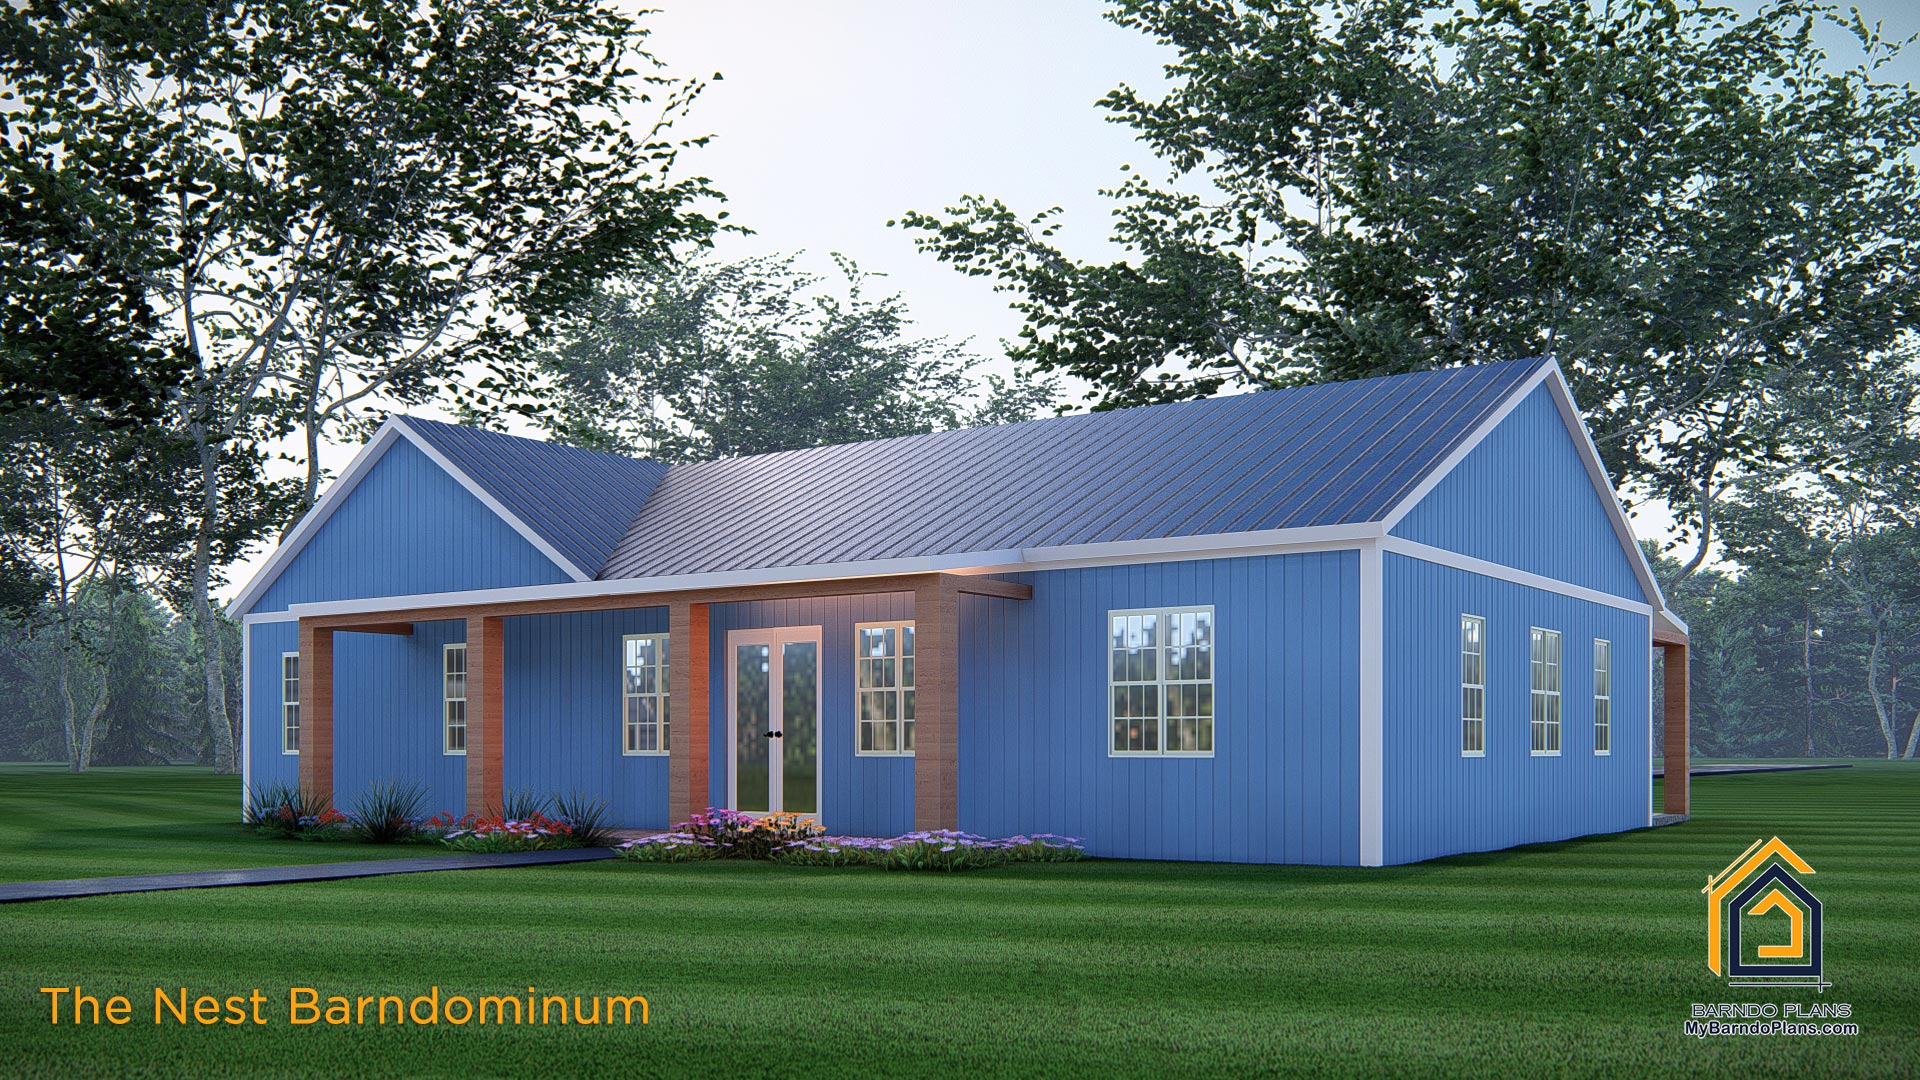 The Nest Barndominium 3D rendering image of home plan front of barndo